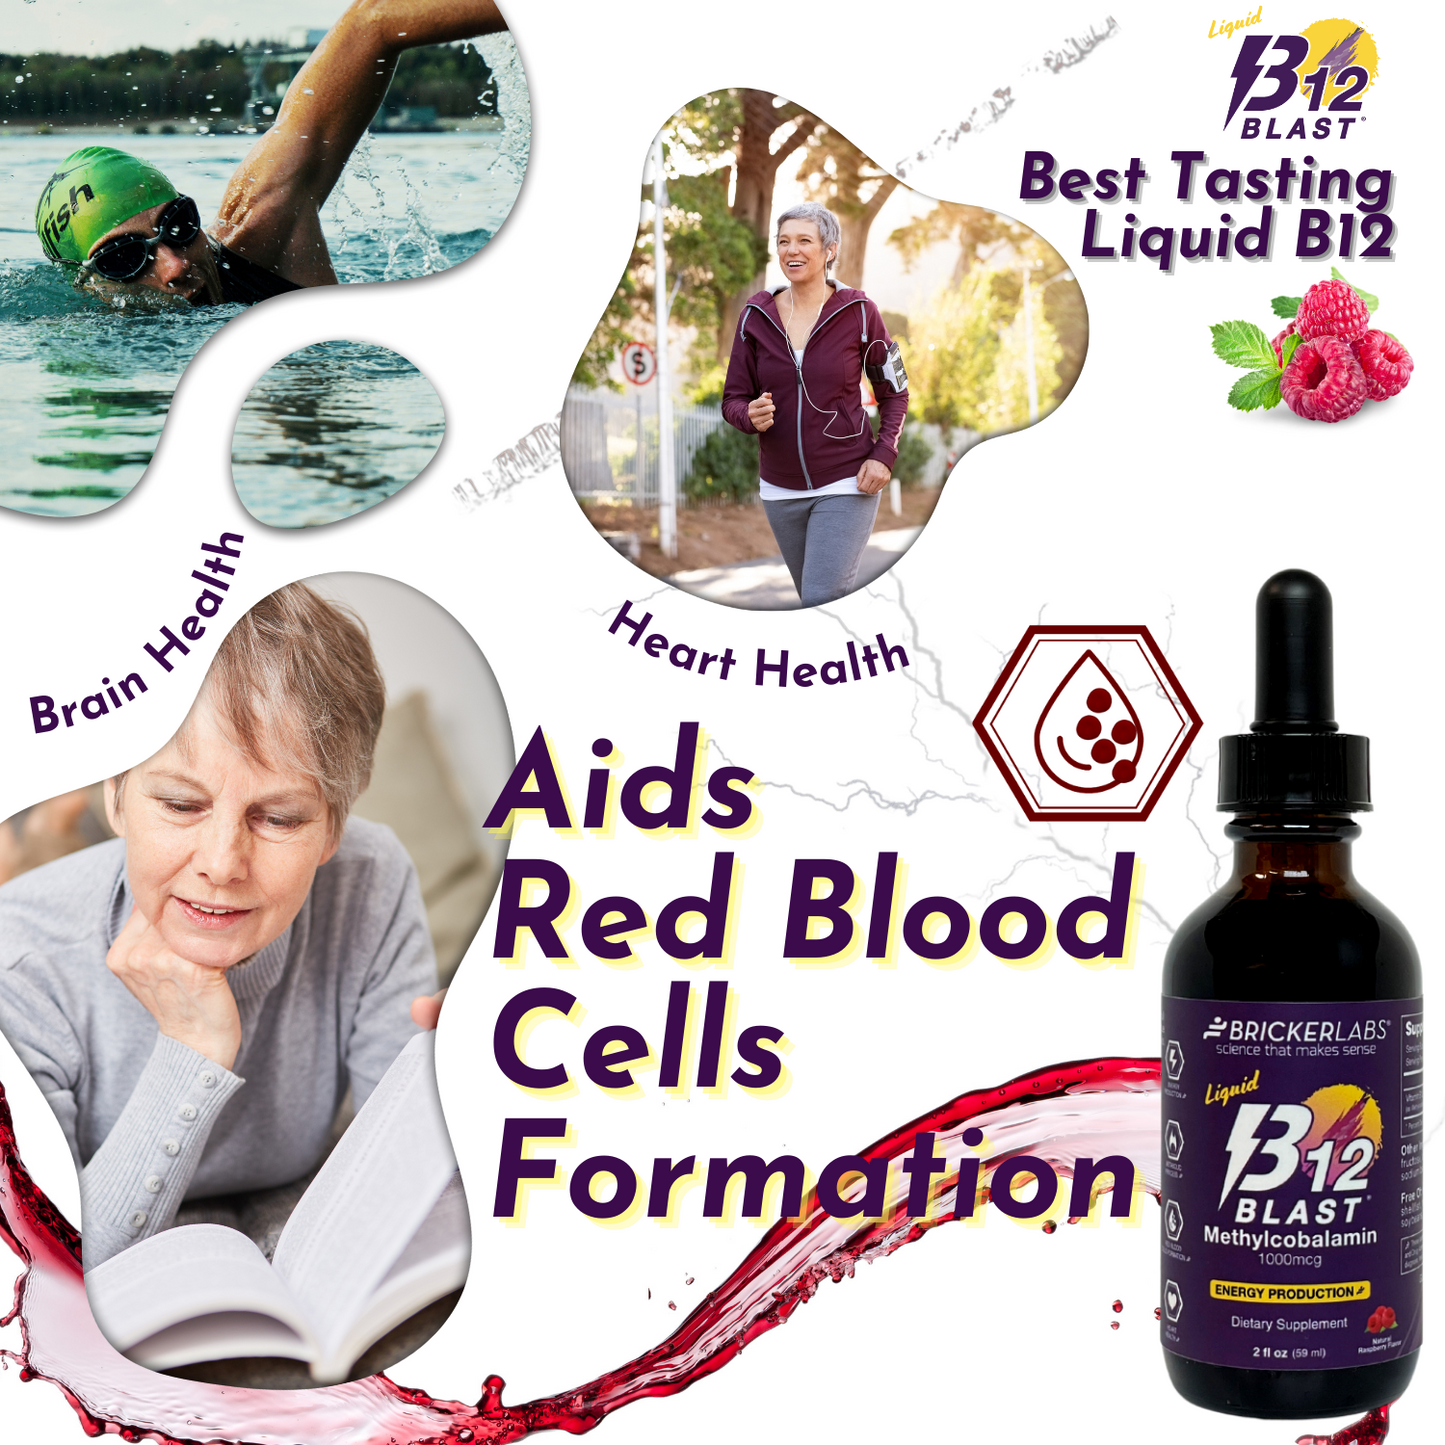 B-12 Blast® Liquid Methylcobalamin